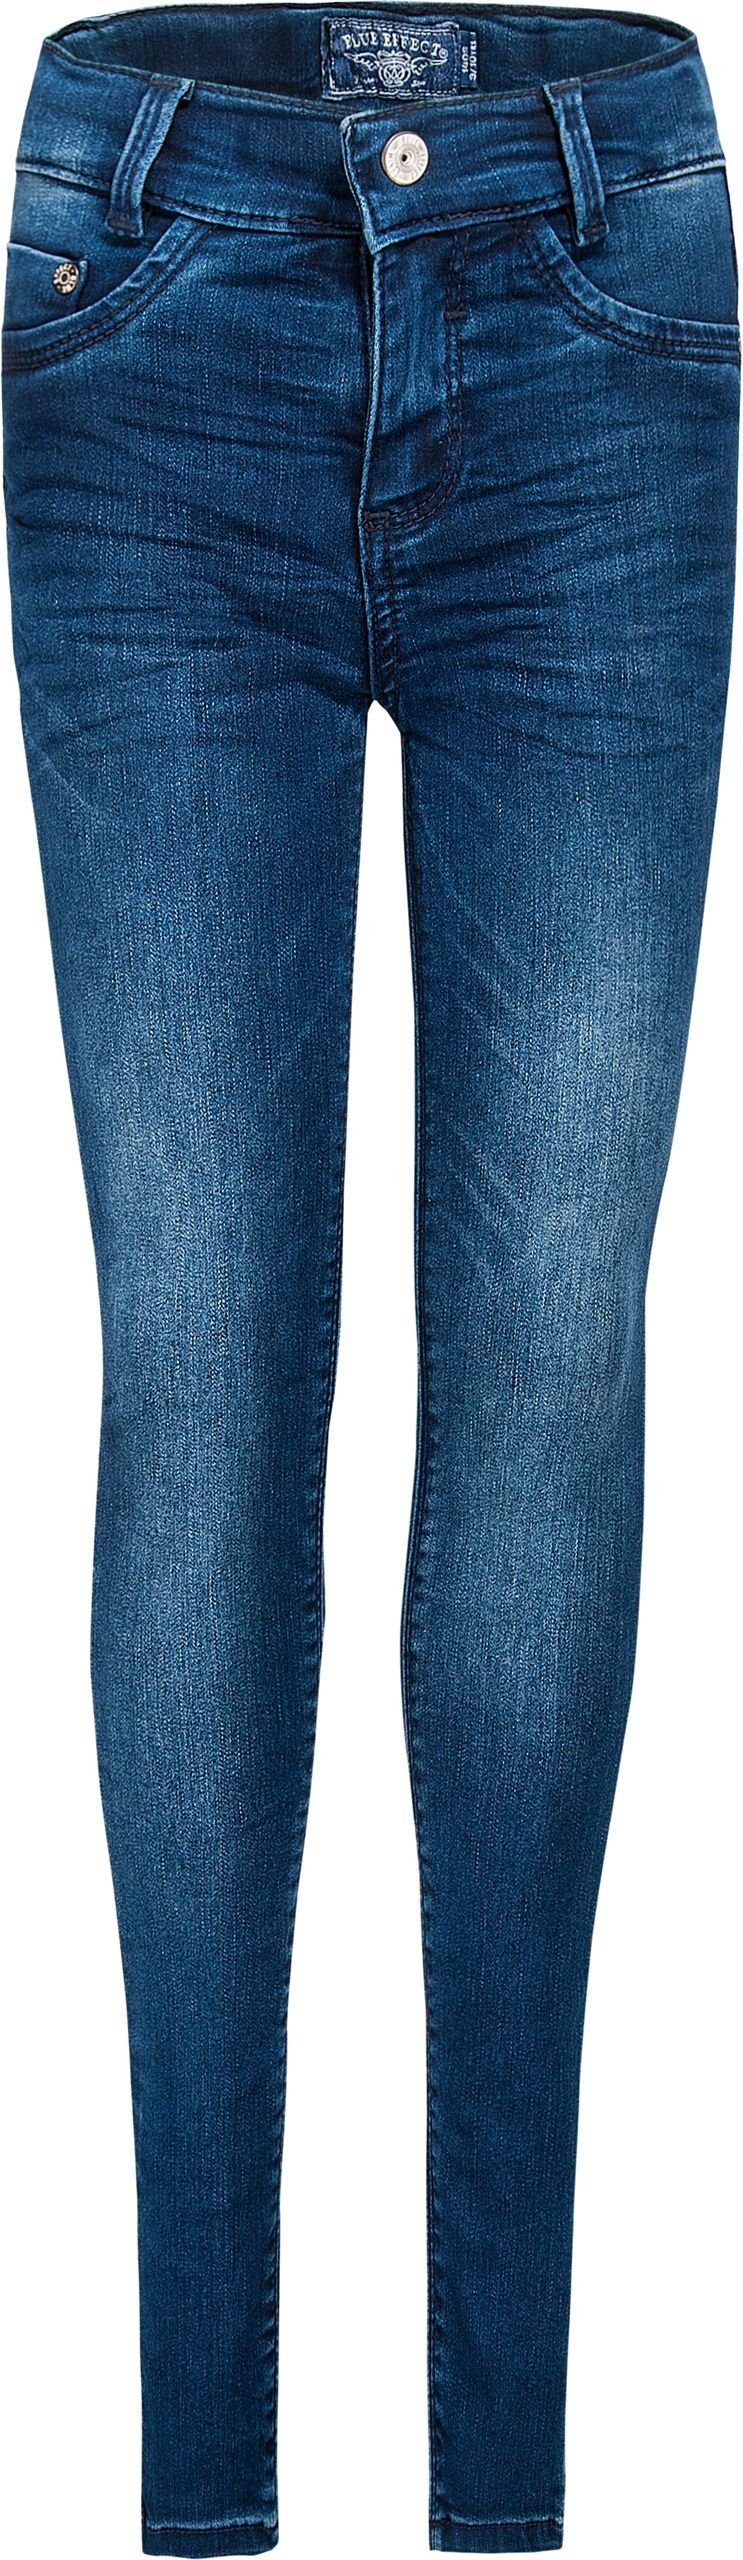 Slim-fit-Jeans superslim Skinny blue Jeans EFFECT ultrastretch BLUE fit medium